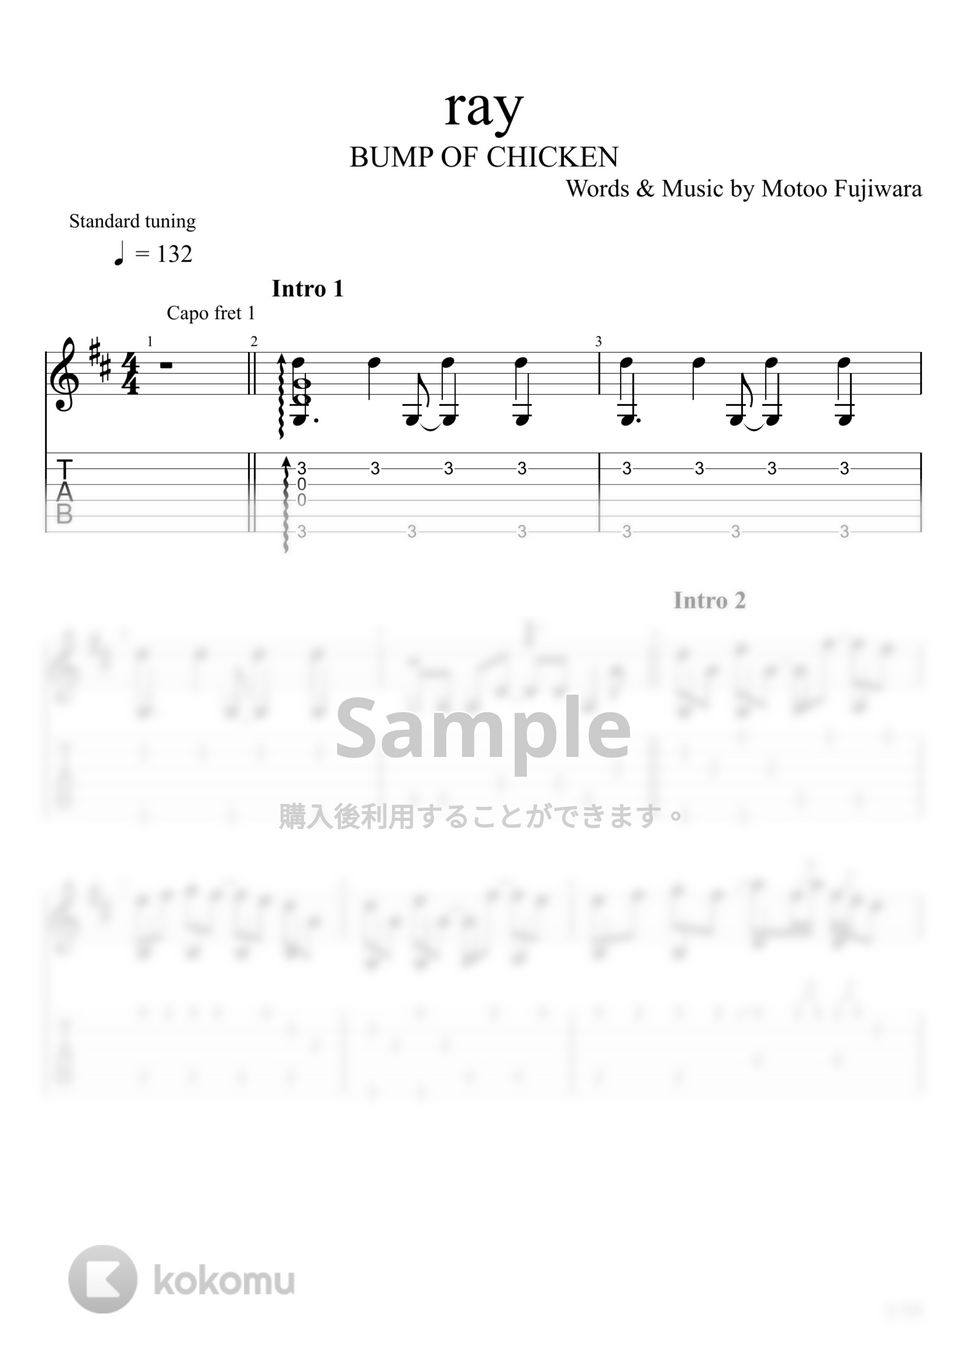 BUMP OF CHICKEN - ray (ソロギター) by u3danchou